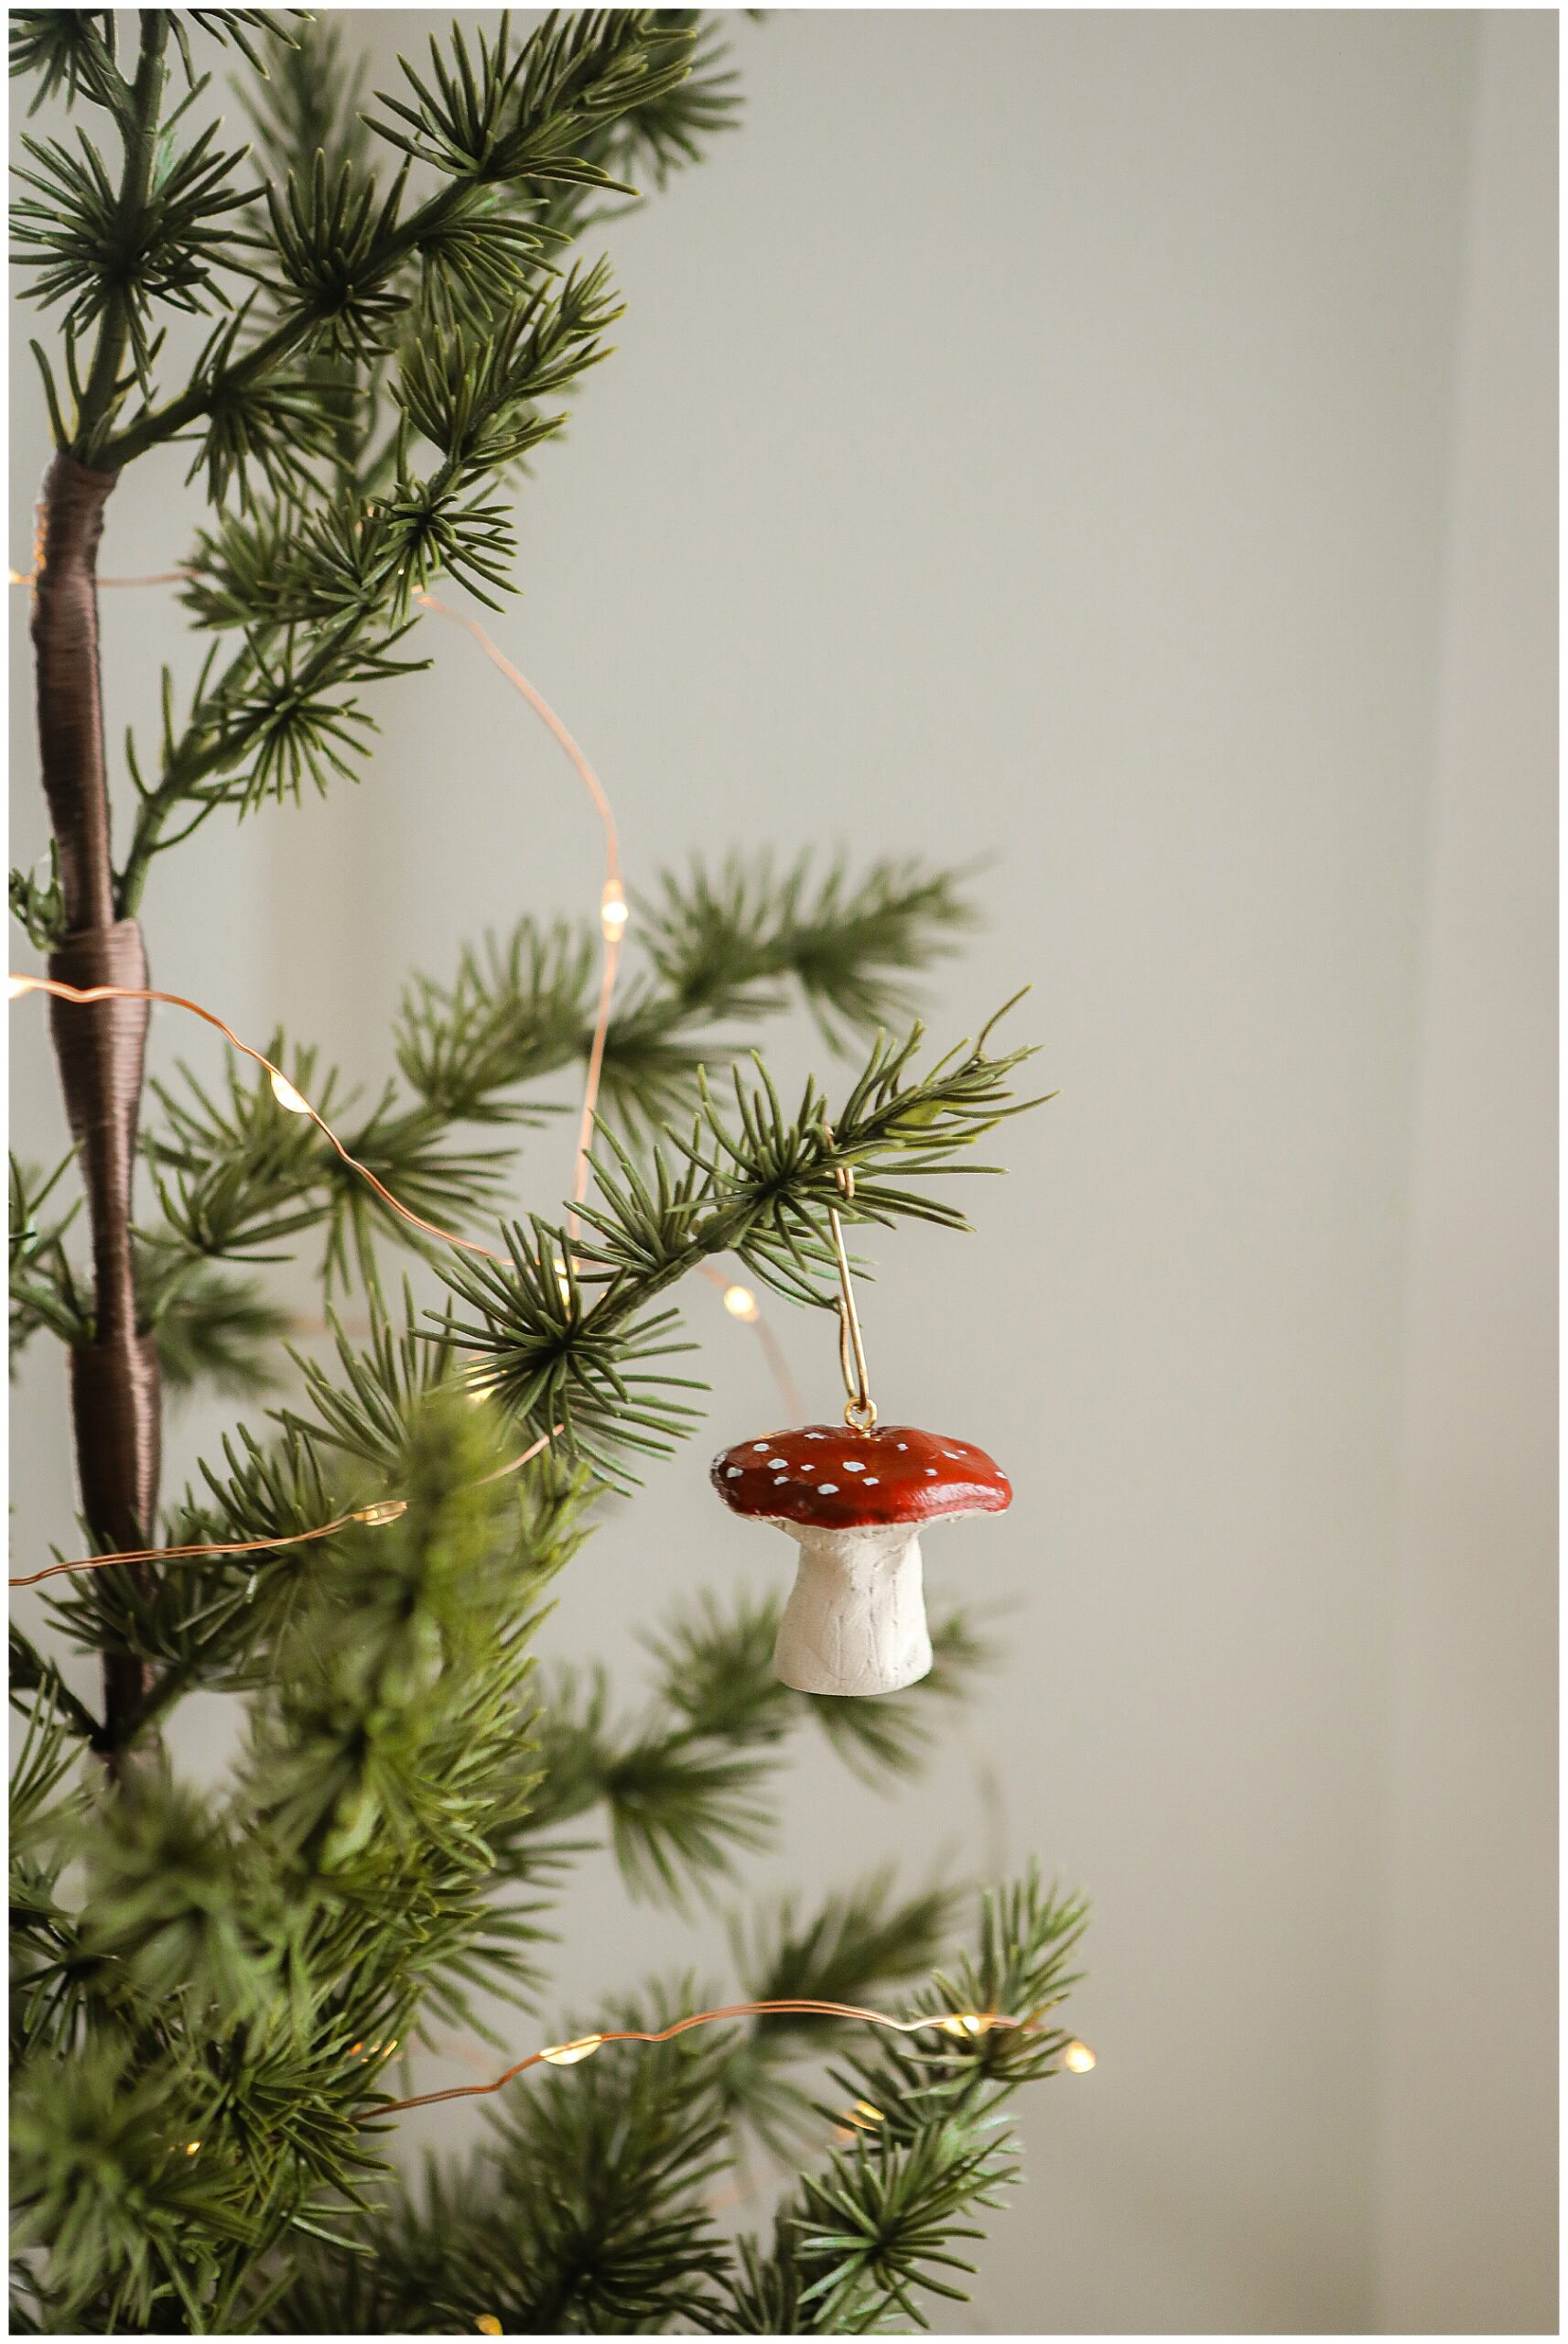 Mushroom ornaments